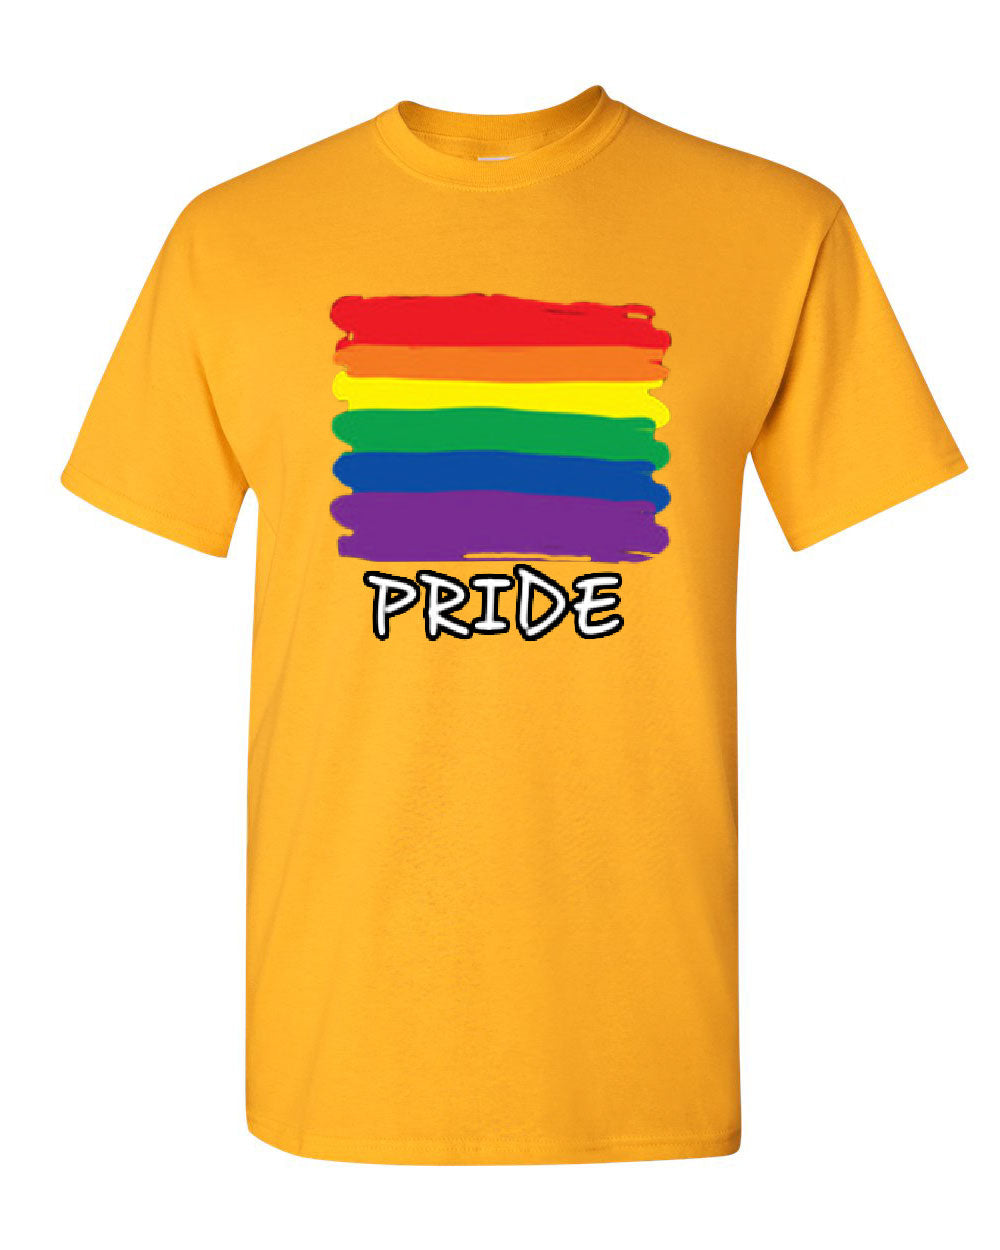 Gay Pride T Shirt Rainbow Flag Lgbt Marriage Love Wins Tee Shirt Ebay